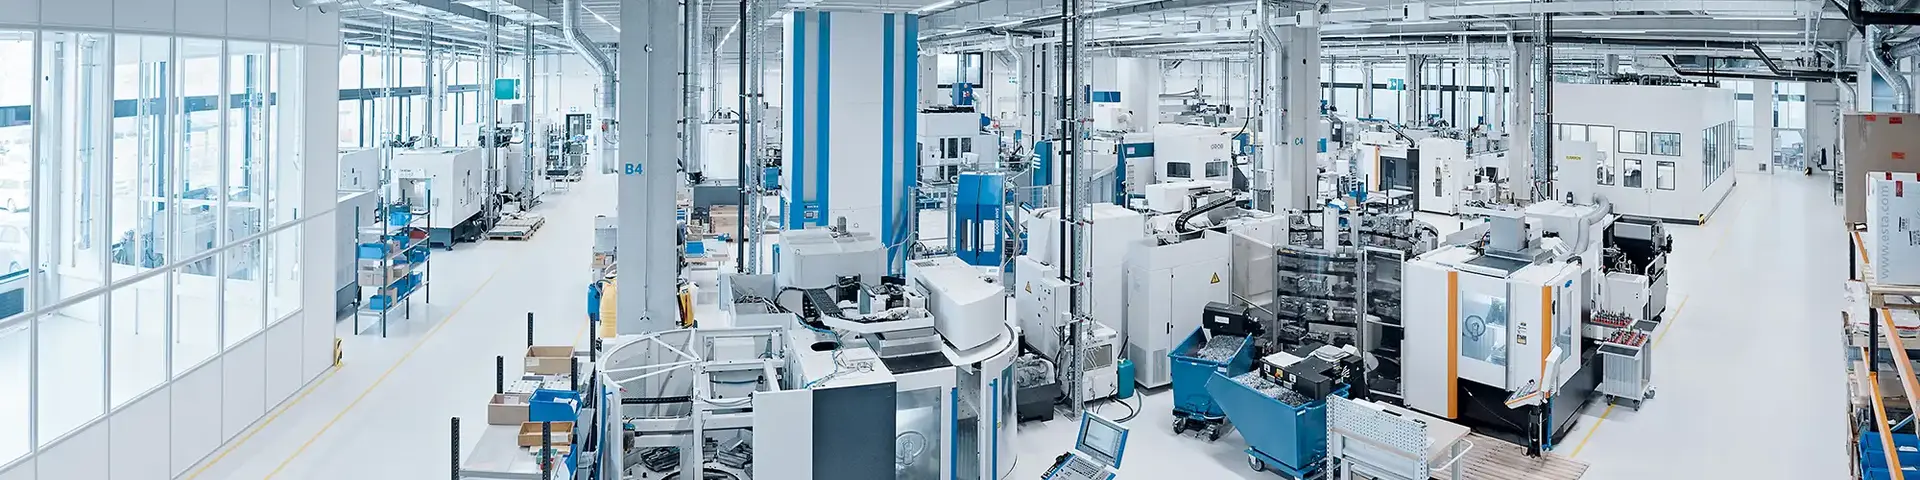 CNC milling operator 100%, Focus on CAM programming